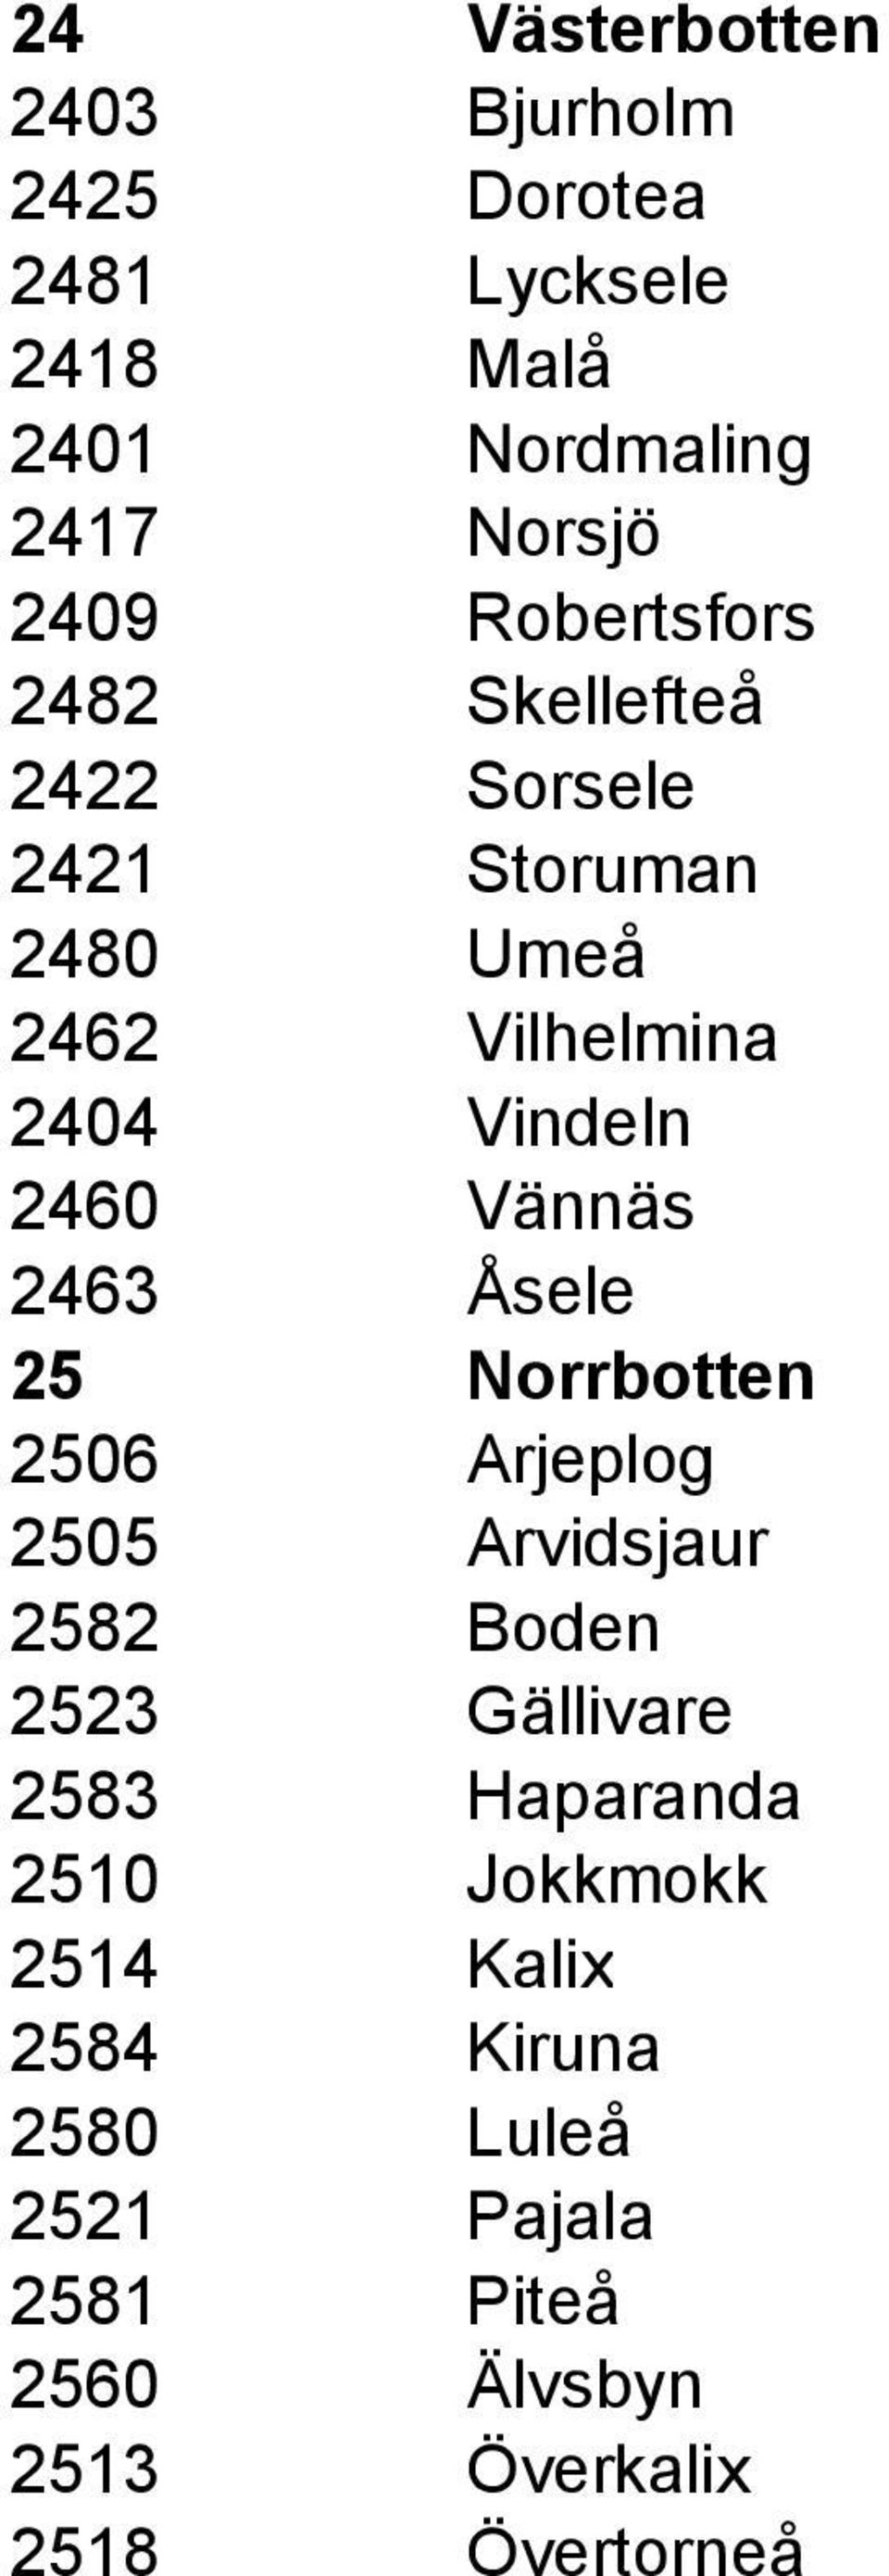 Vännäs 2463 Åsele 25 Norrbotten 2506 Arjeplog 2505 Arvidsjaur 2582 Boden 2523 Gällivare 2583 Haparanda